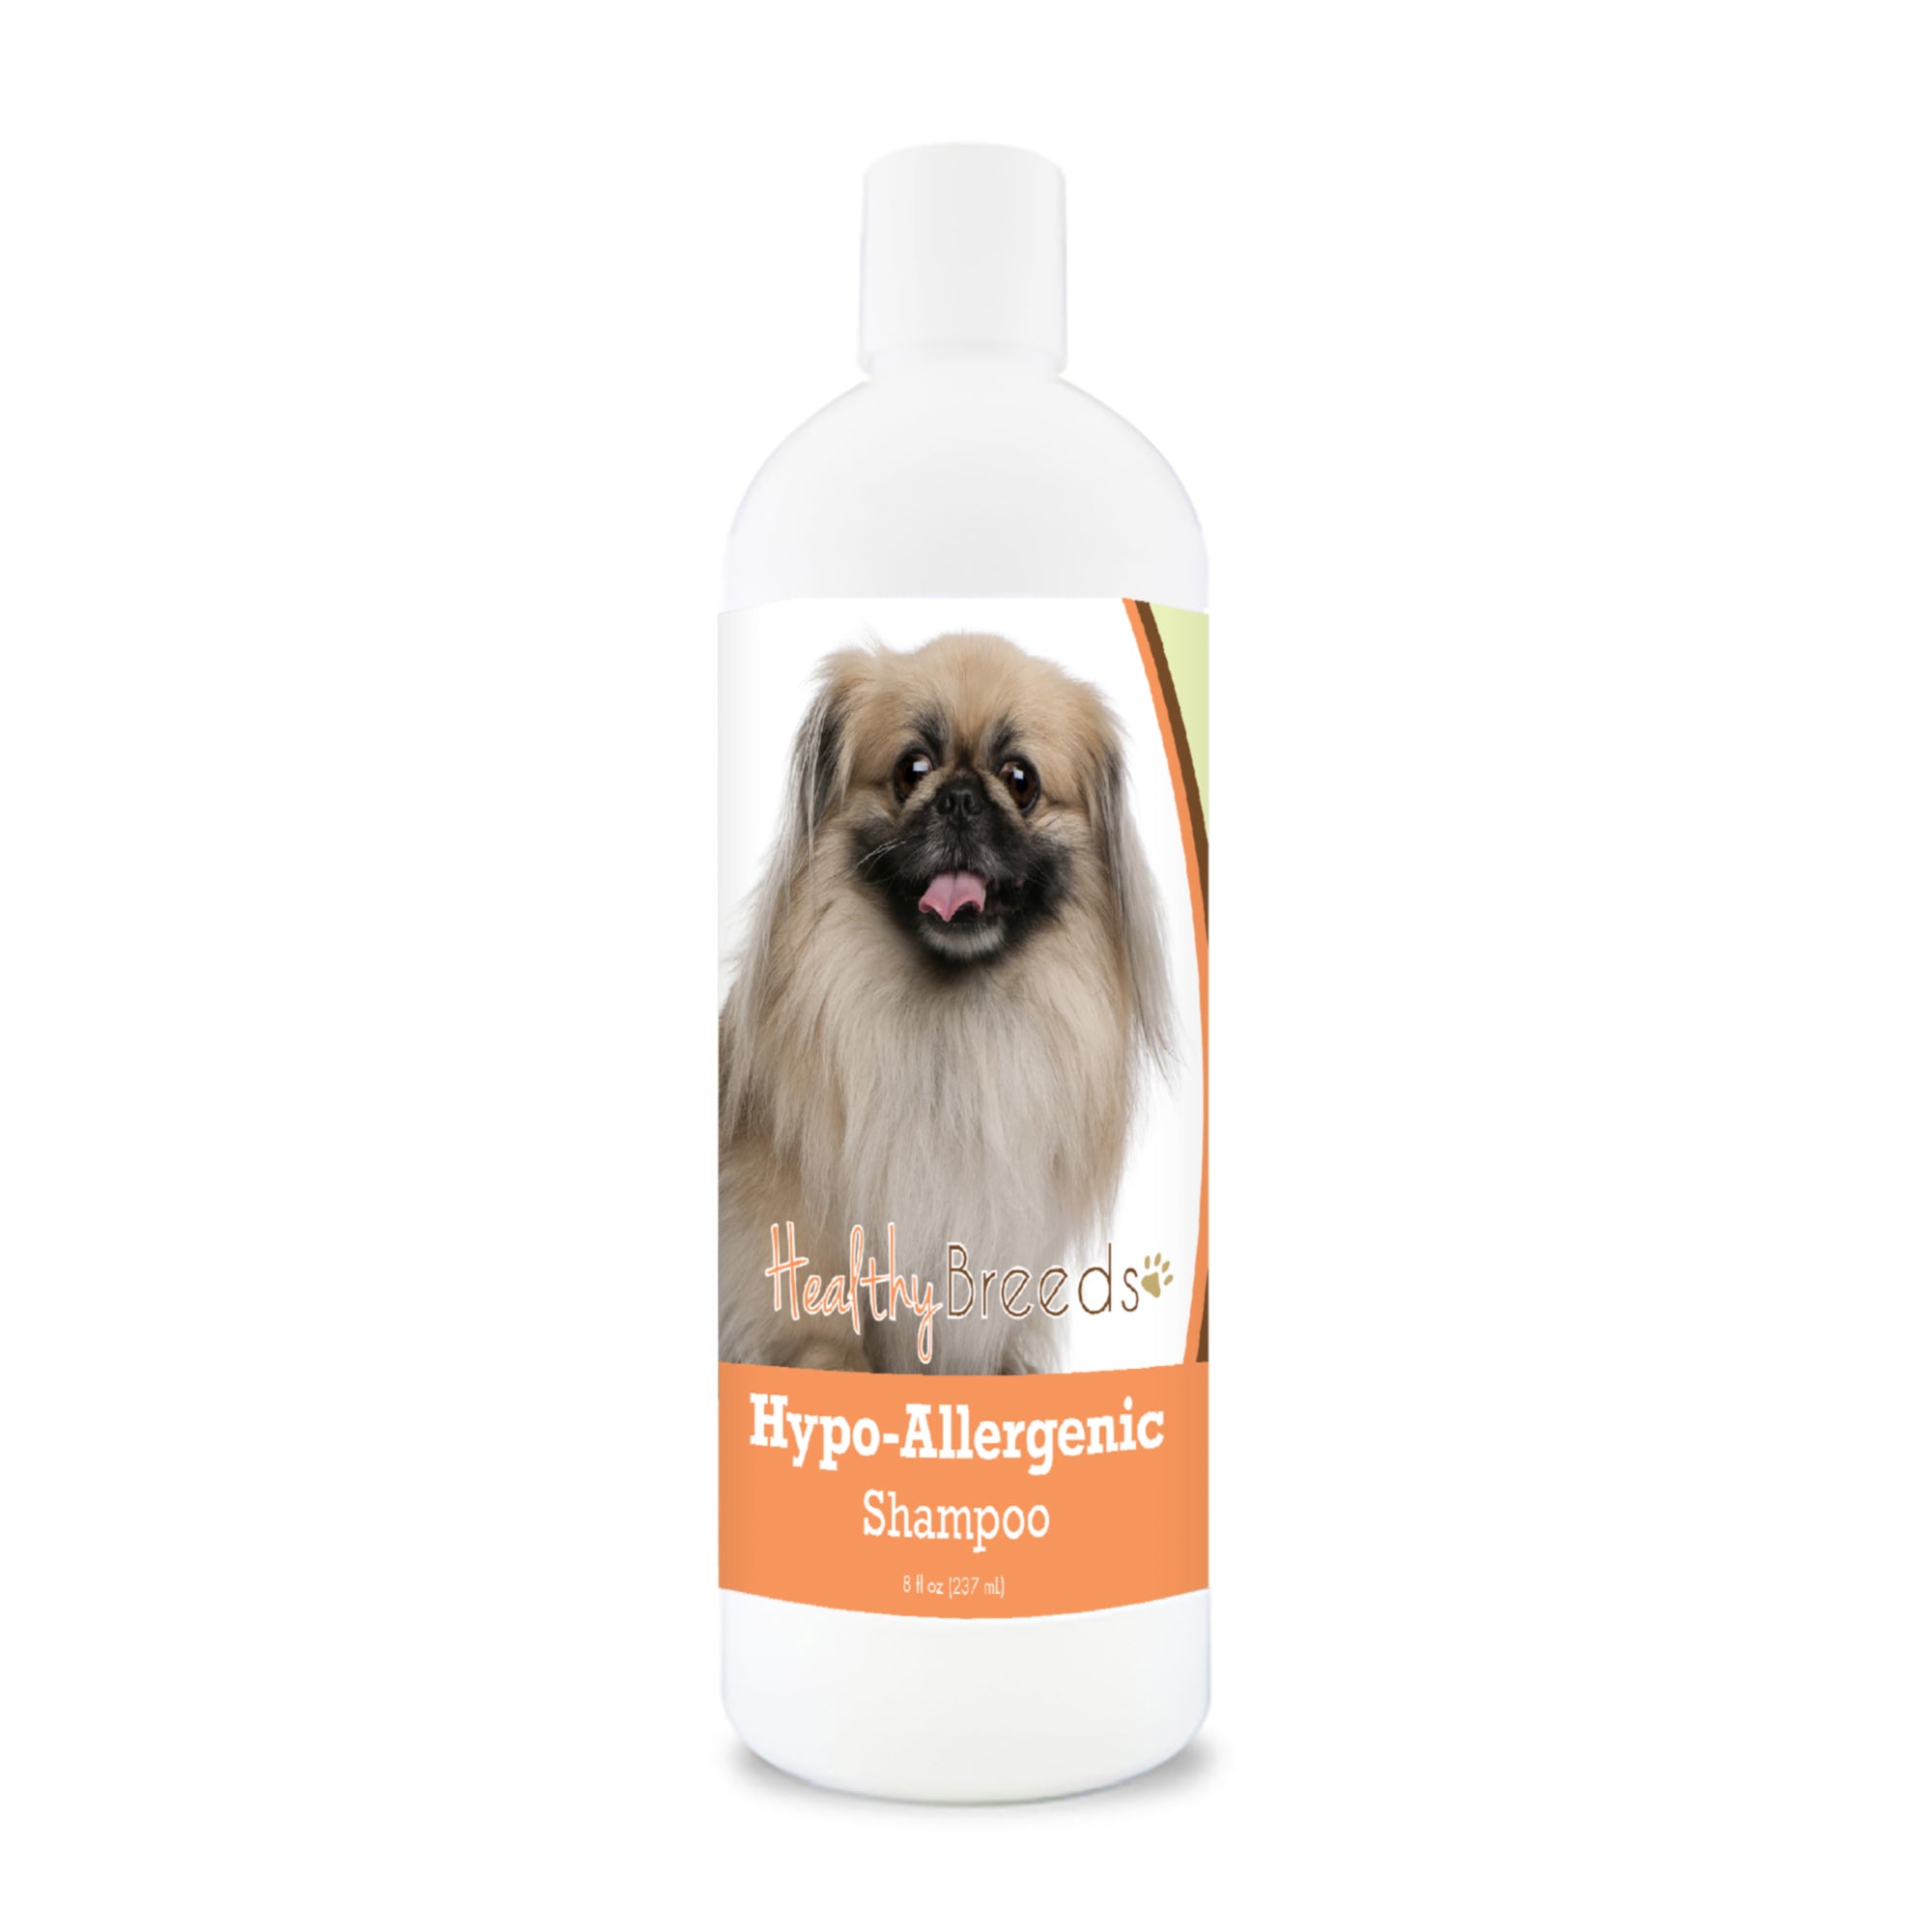 Pekingese Hypo-Allergenic Shampoo 8 oz